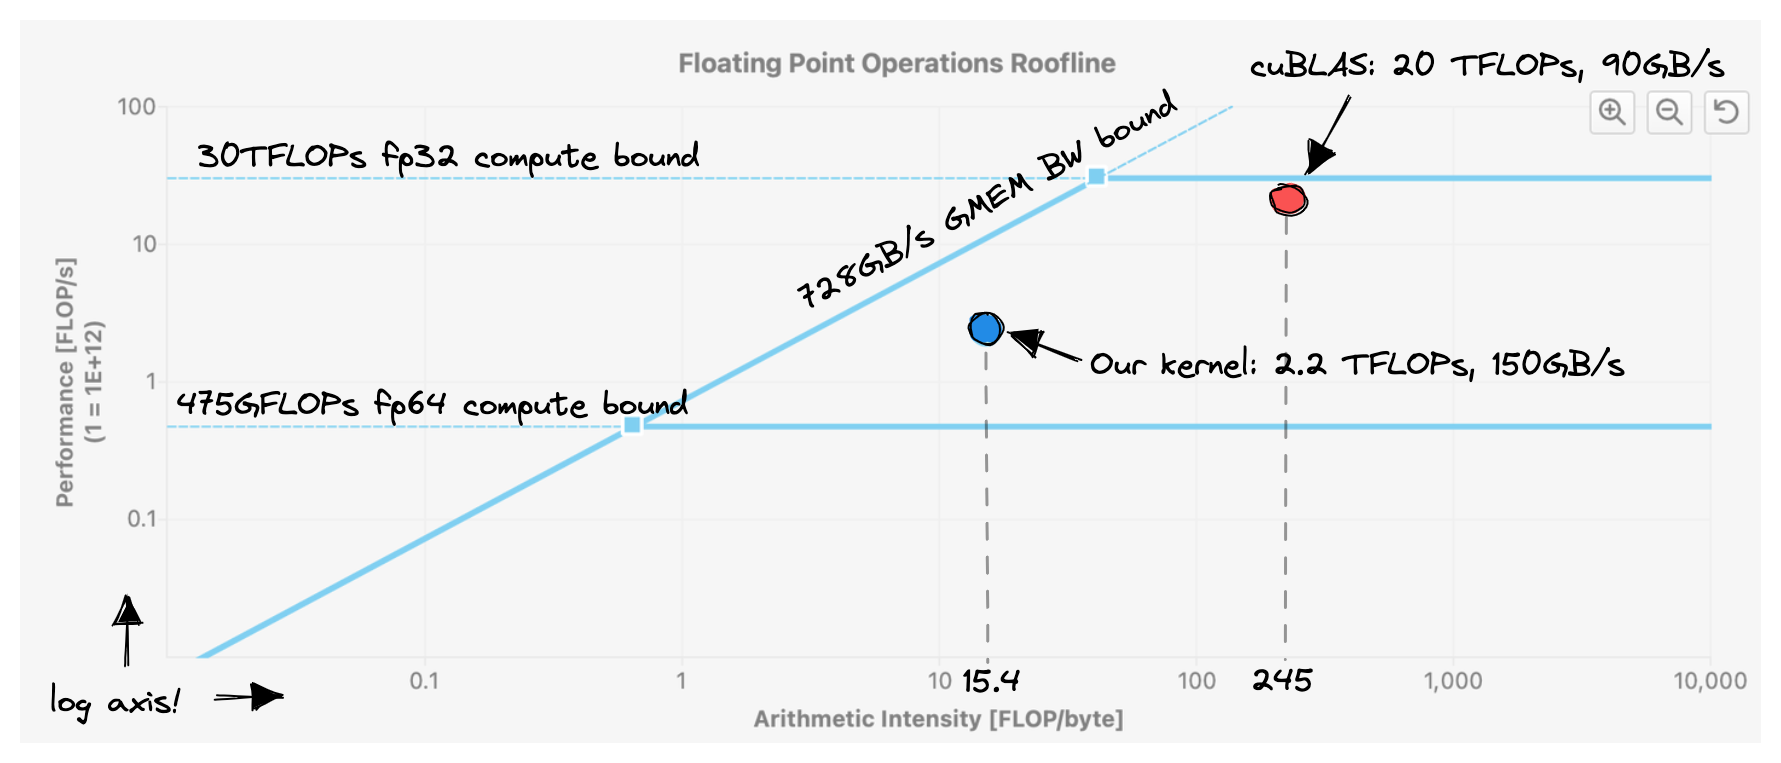 Roofline analysis of kernel 3